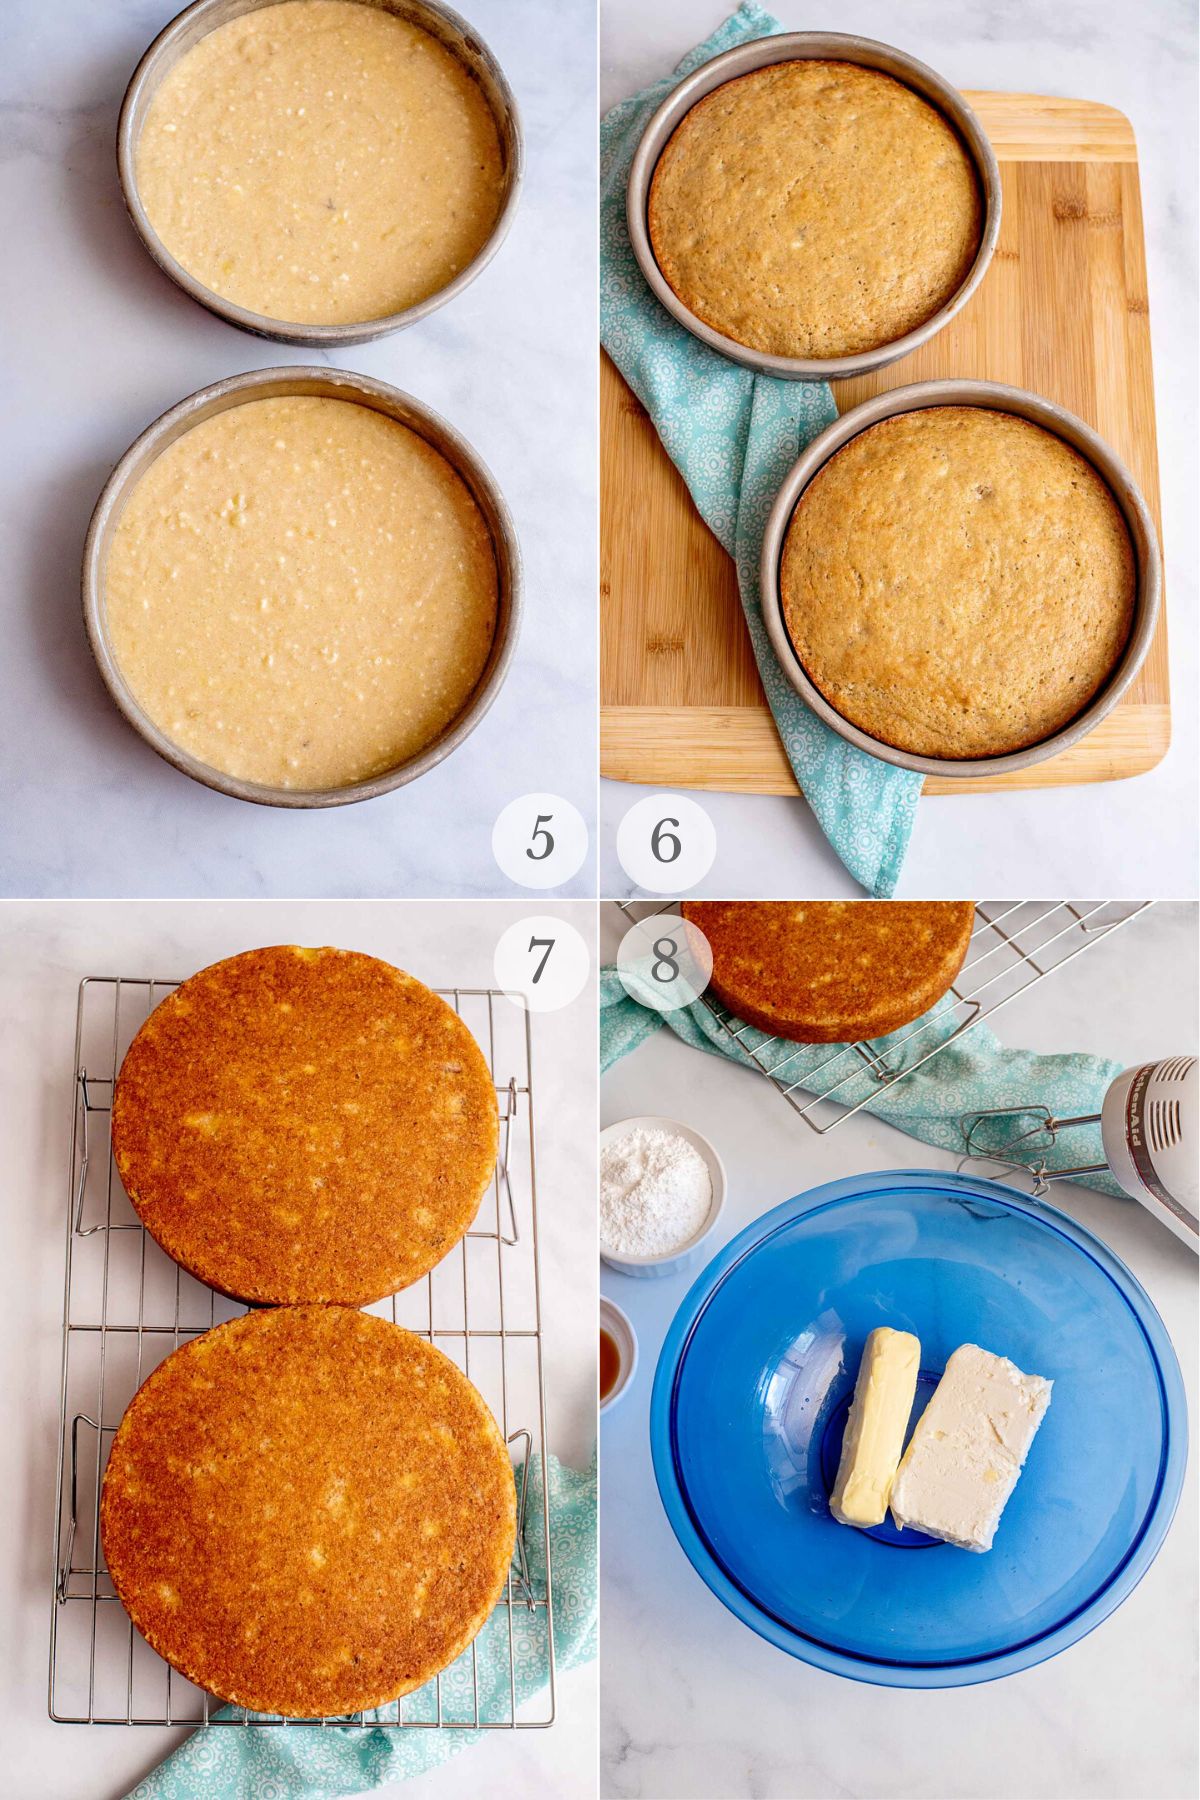 banana cake recipe steps 5-8.